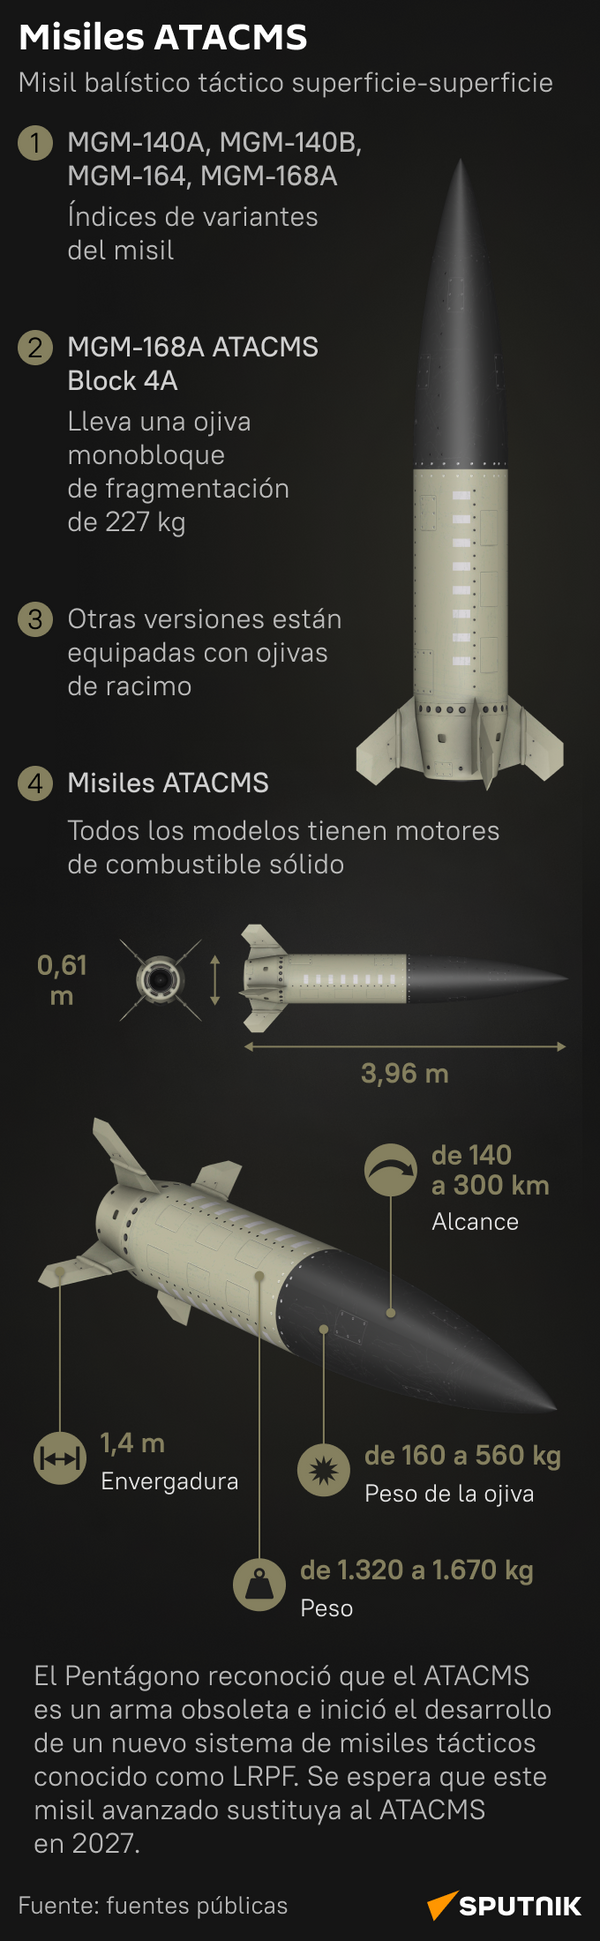 Misiles ATACMS: el arma de largo alcance que Kiev anhela recibir - Sputnik Mundo